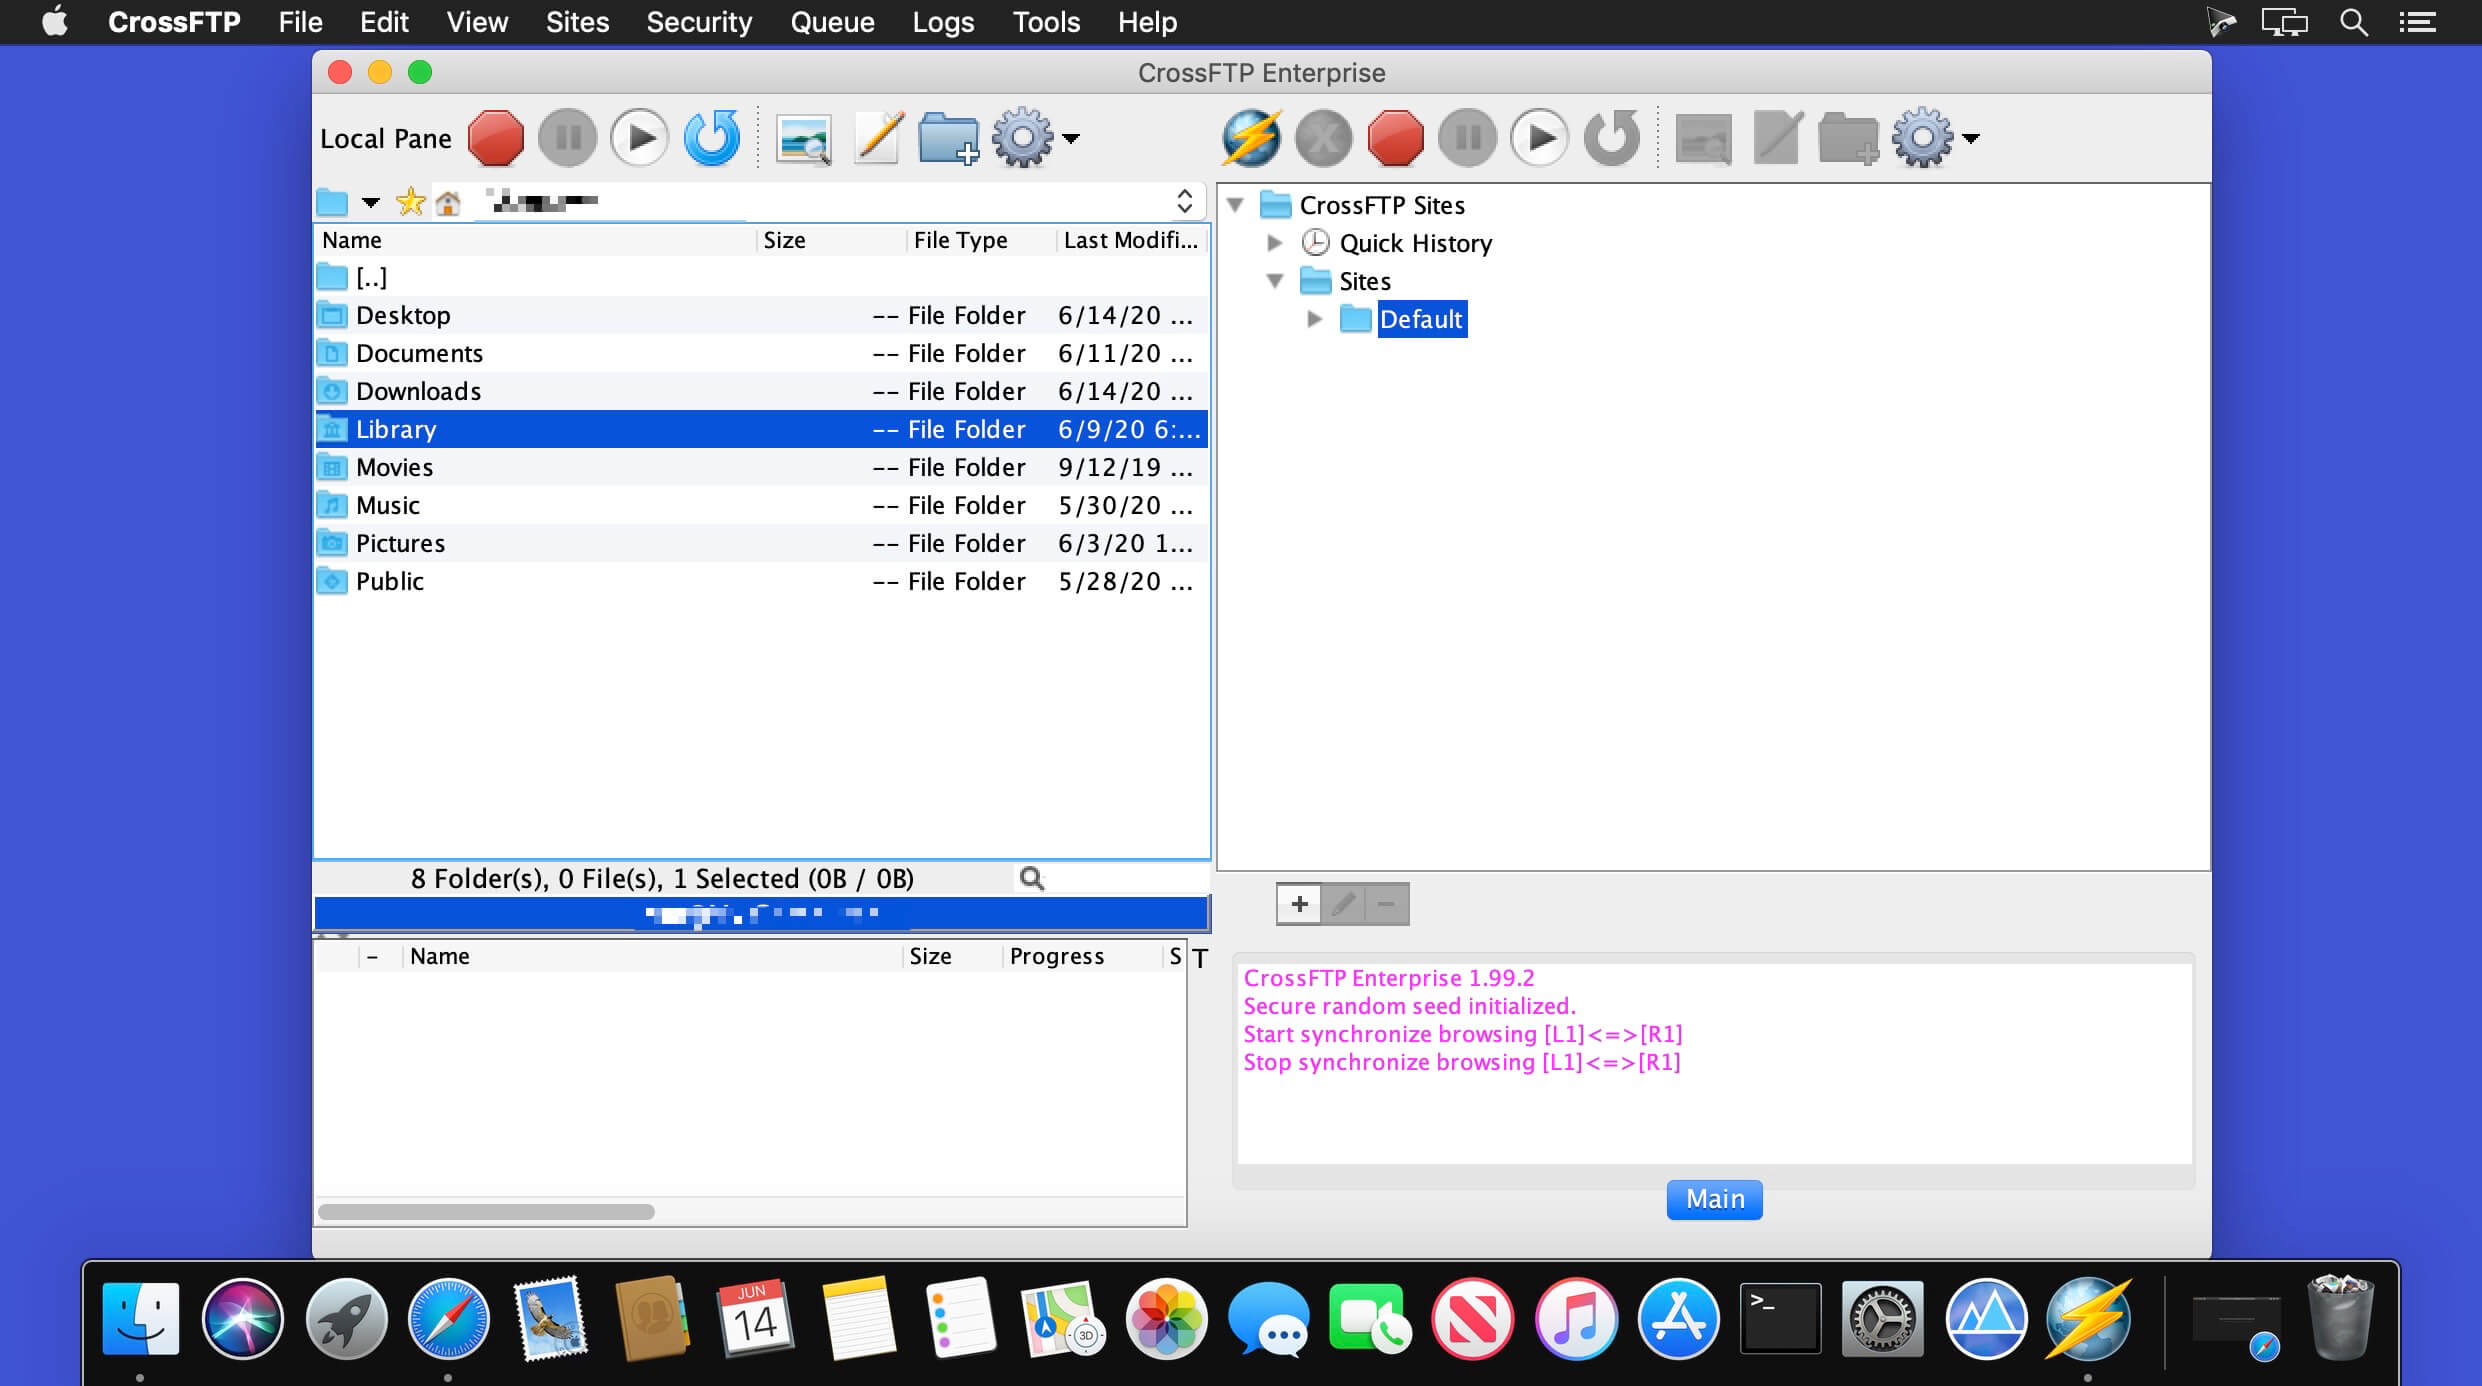 CrossFTP Enterprise 1.99.2 download | macOS